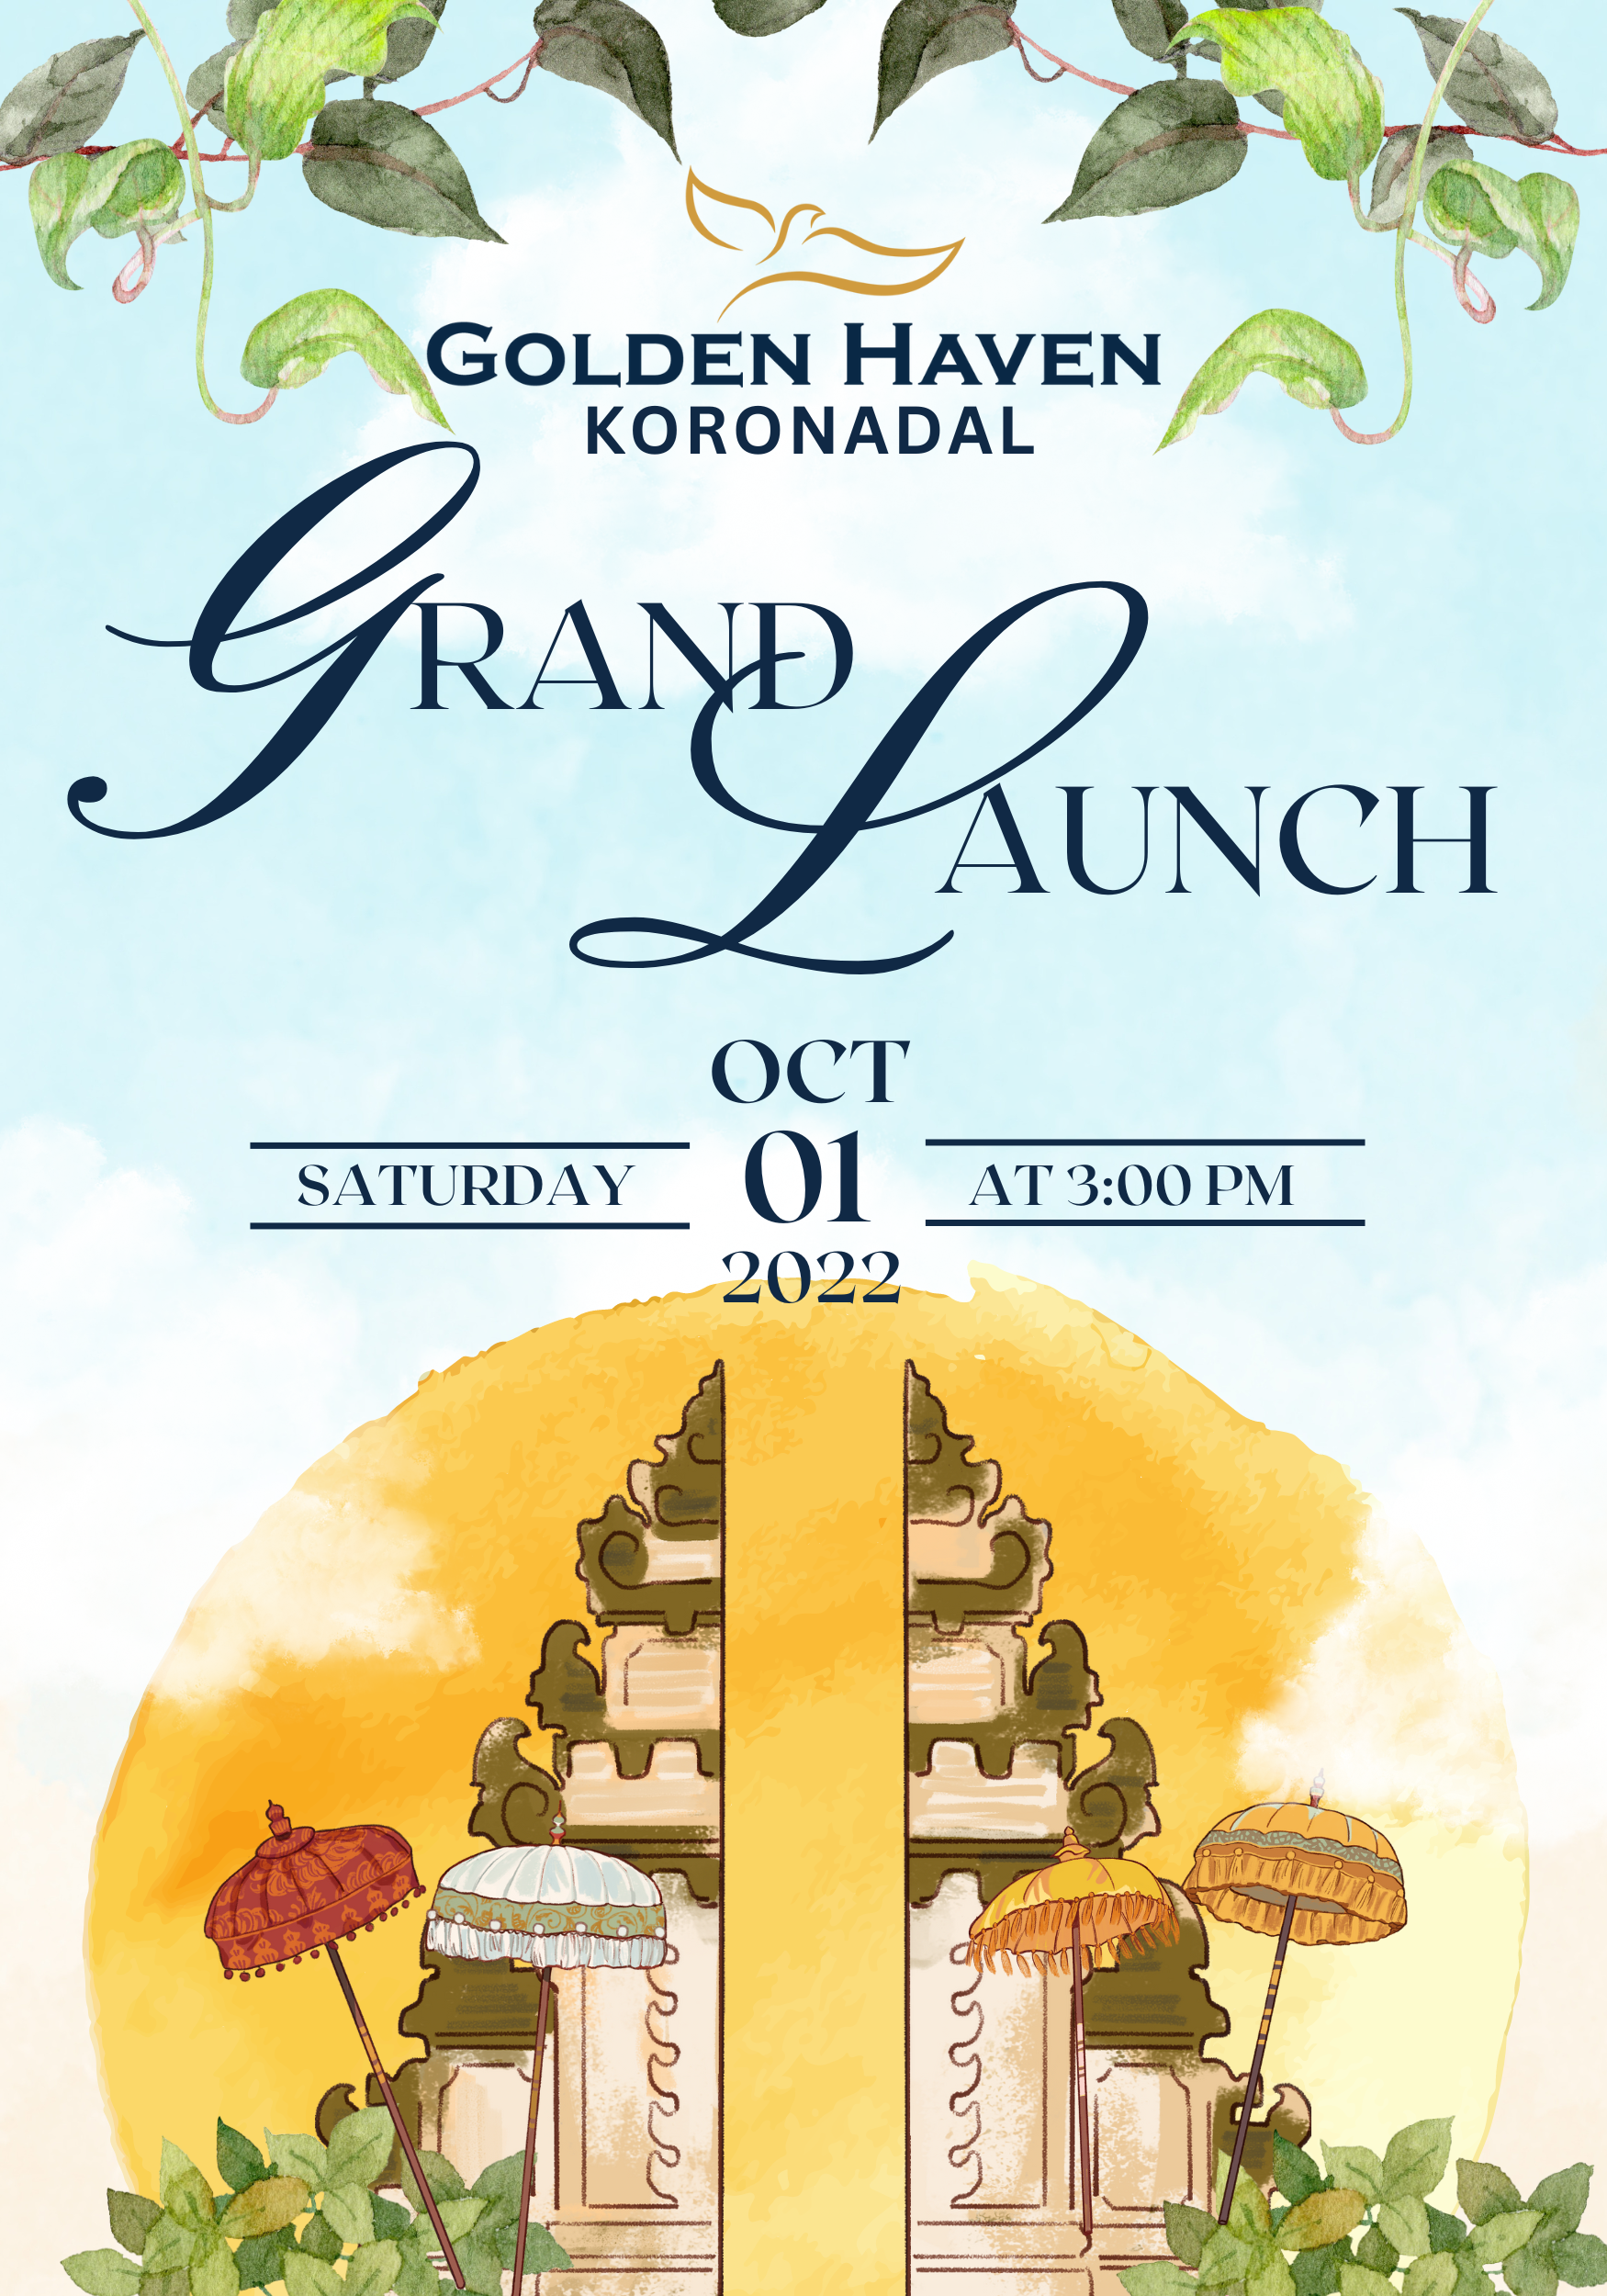 Koronadal Grand Launch FB Invitation